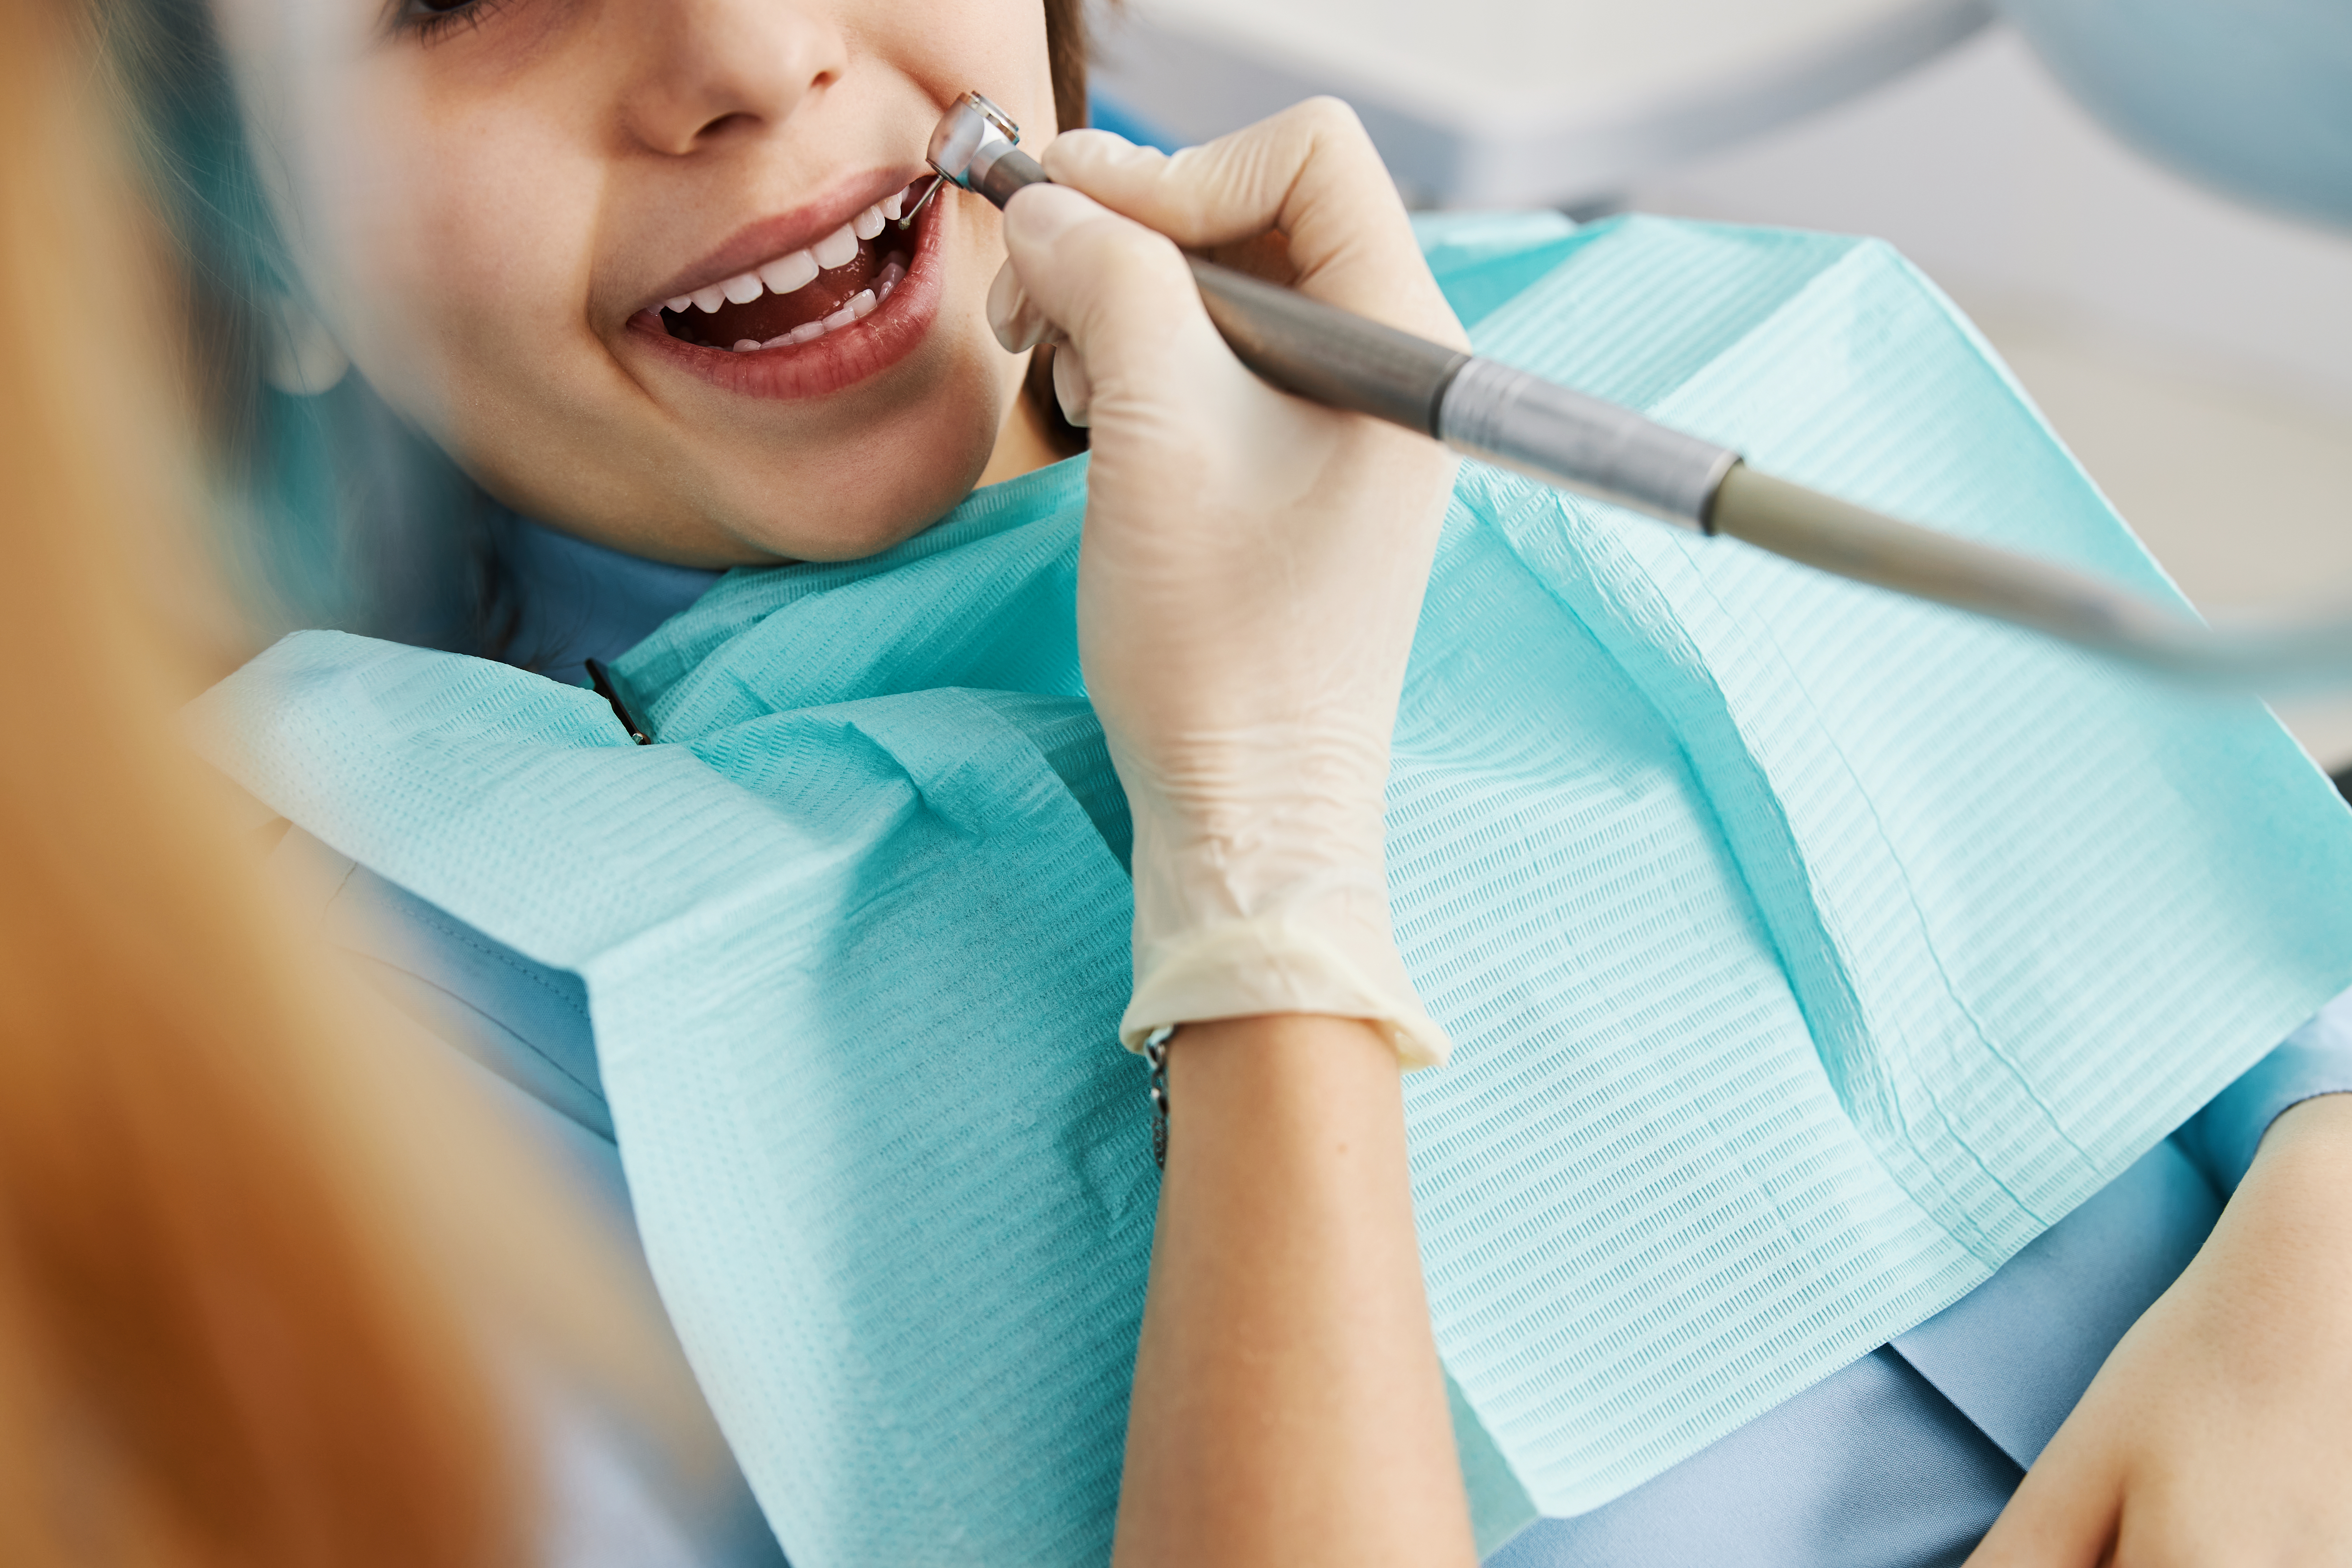 Teeth drilling procedure on minor patient teeth